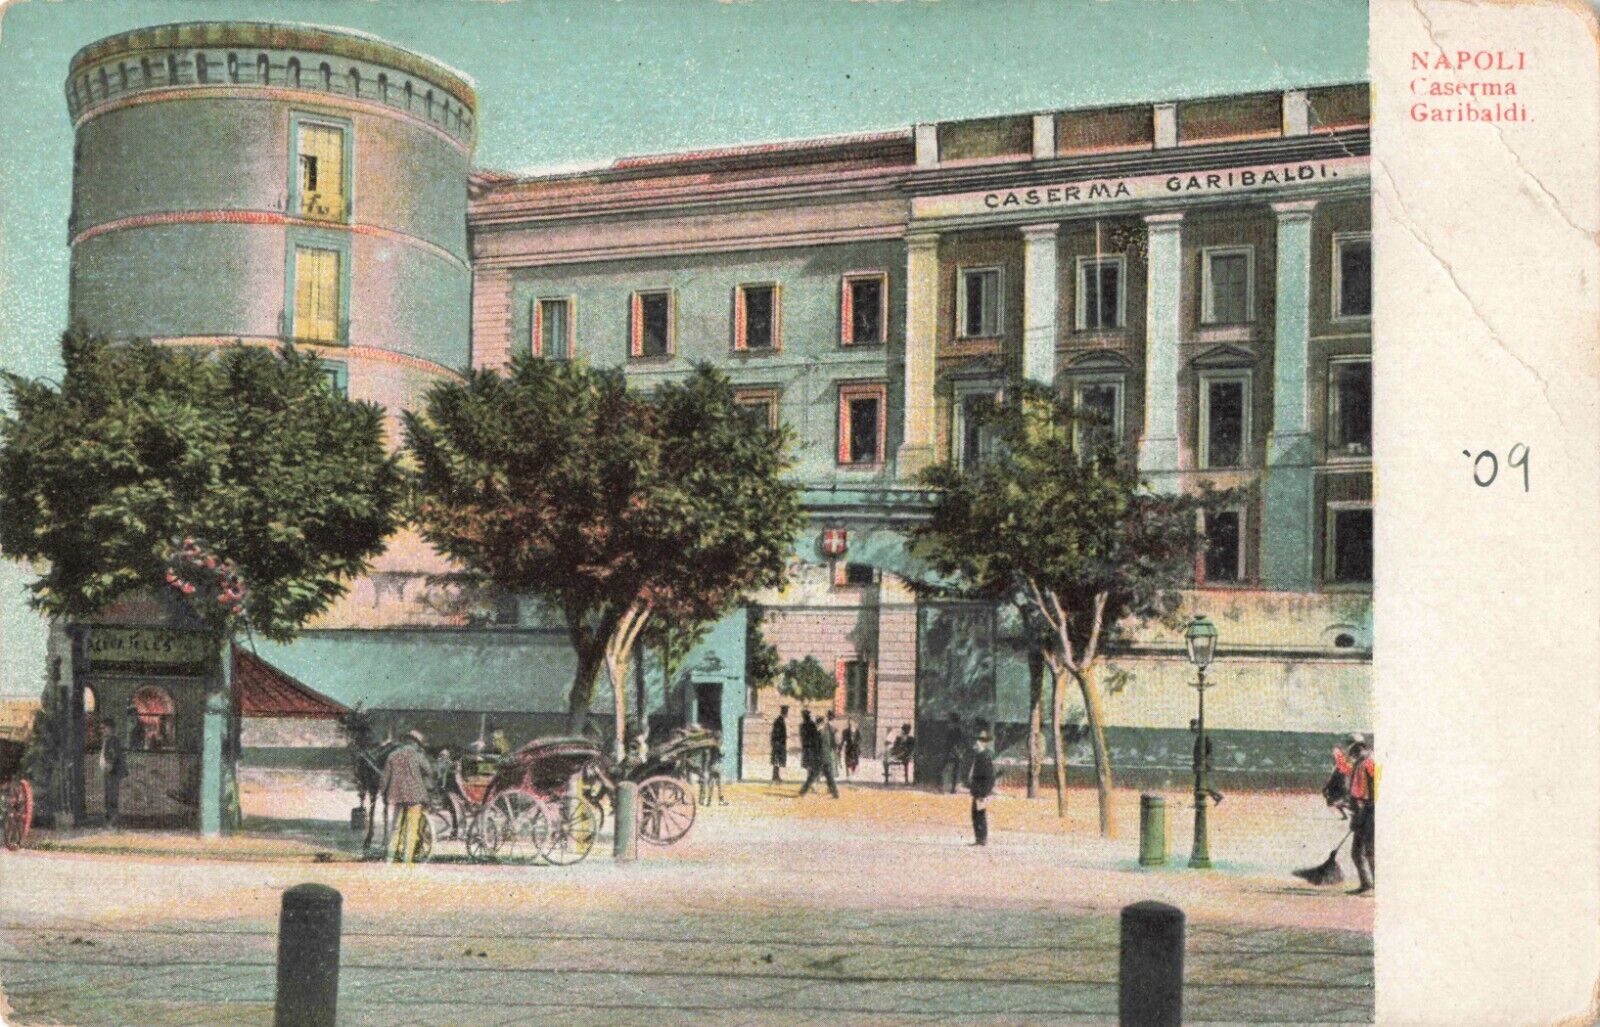 Naples Italy, Garibaldi Barracks, Street View, Vintage Postcard